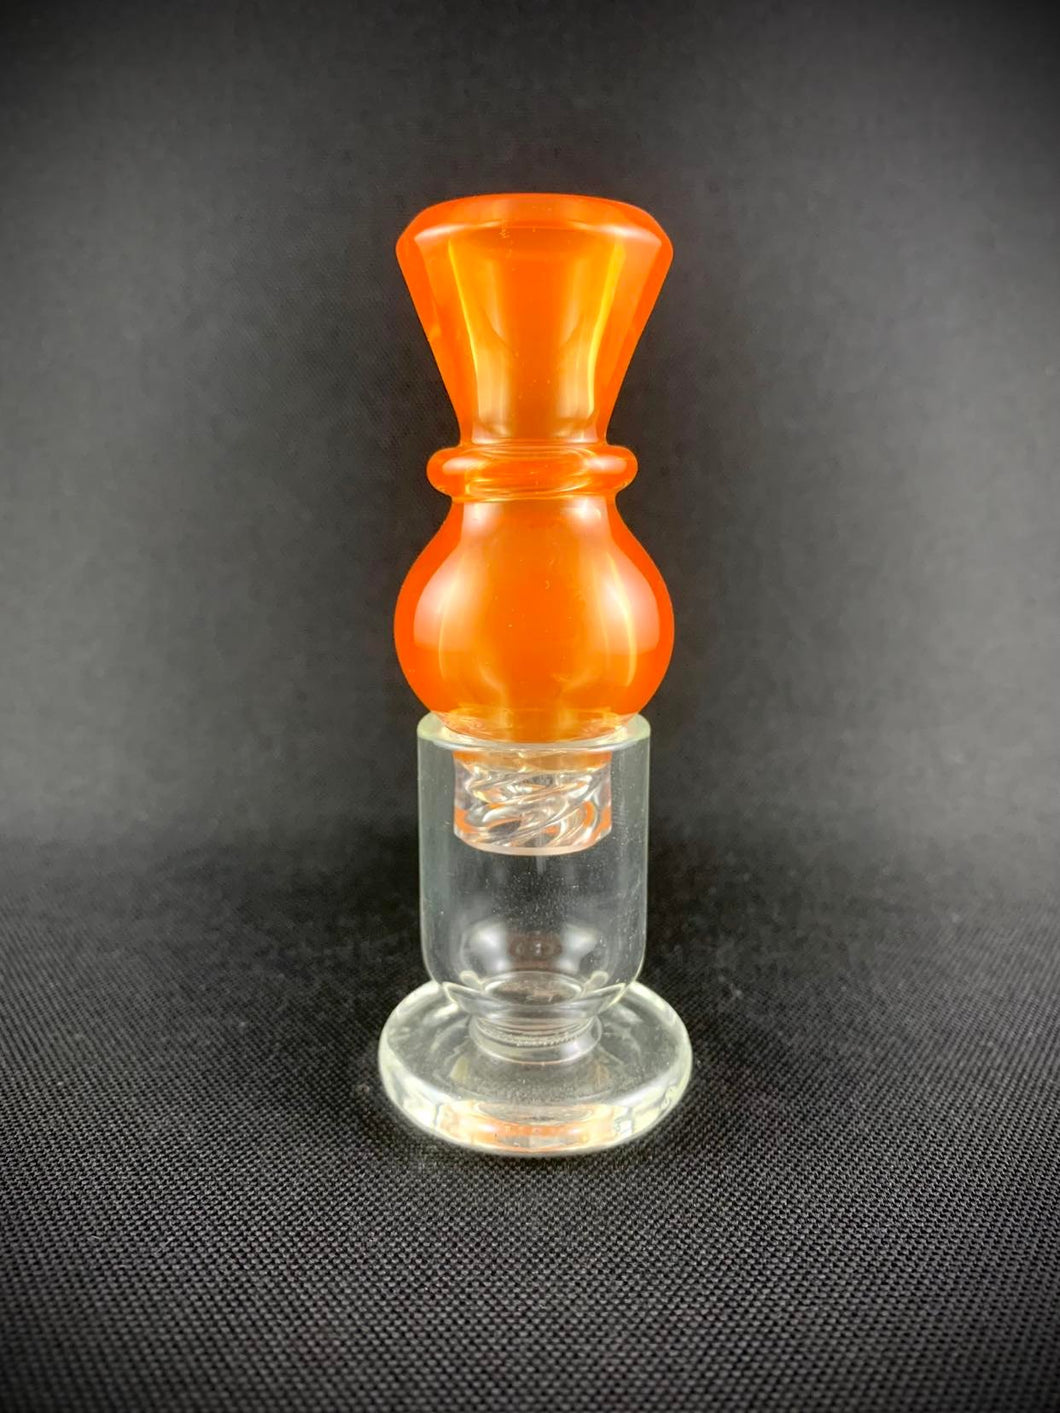 Melitzart Glass Spinner Carb Cap #5 Orange Tang